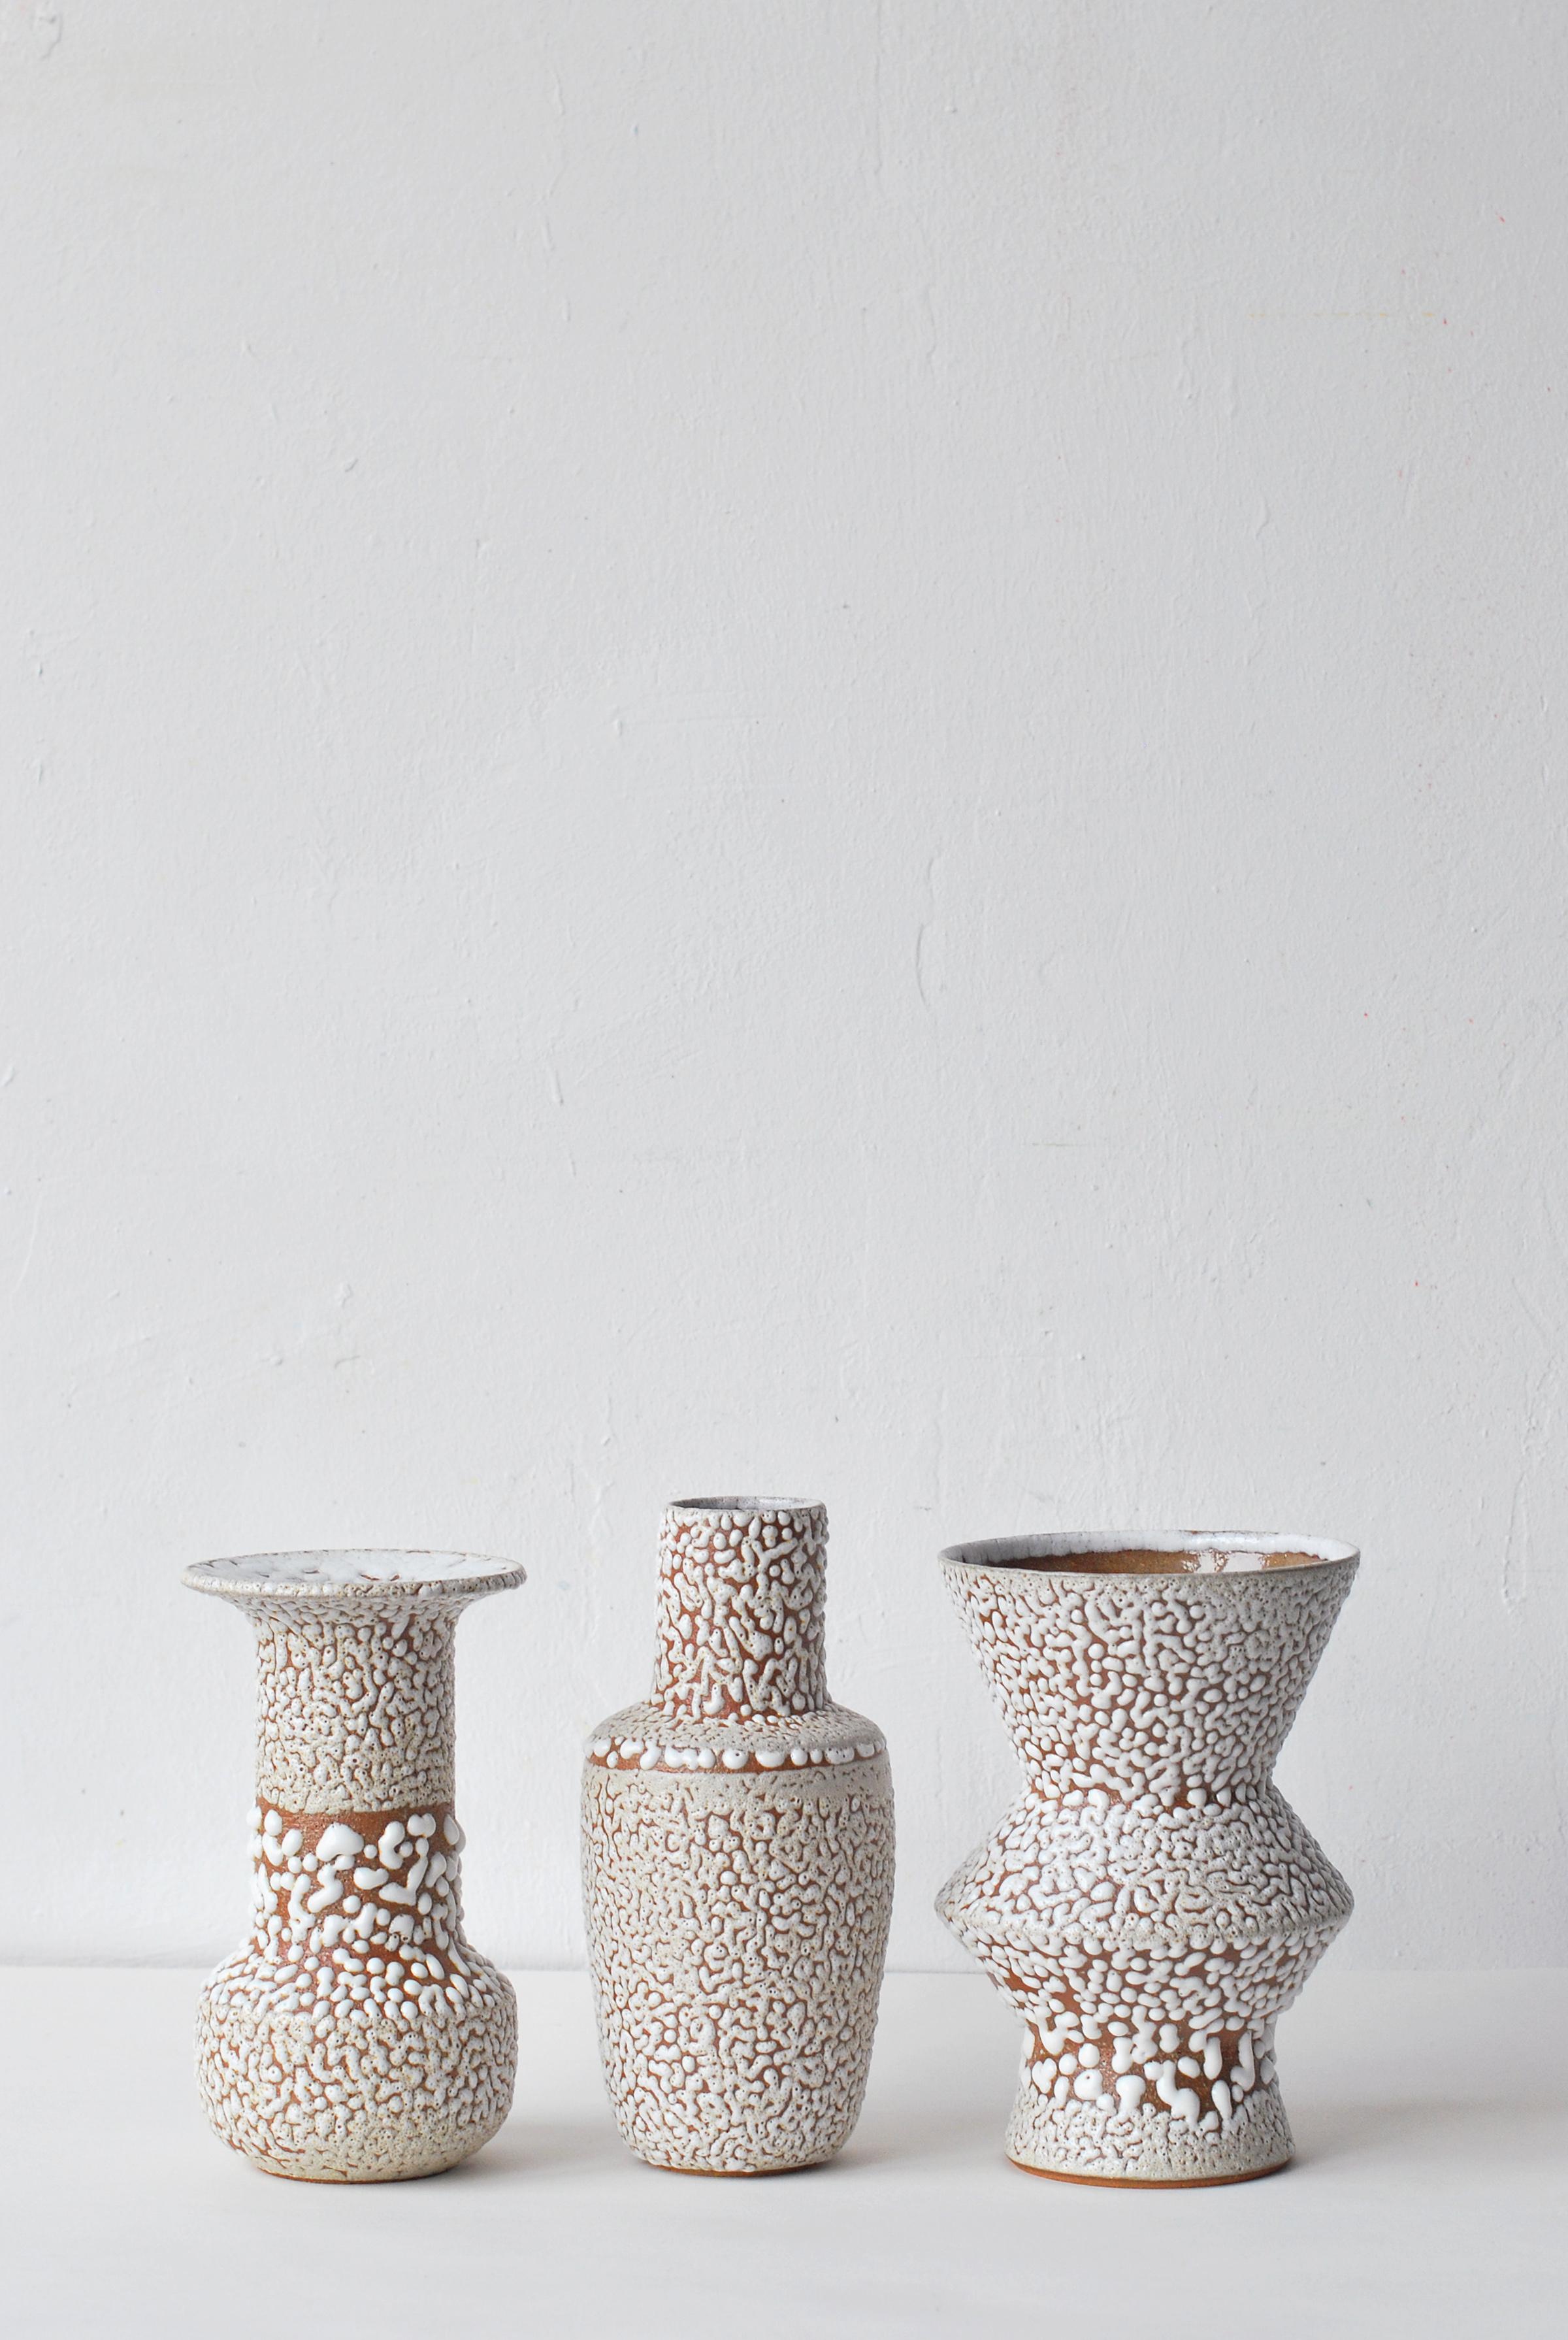 Set of 3 white stoneware vase by Moïo Studio.
Dimensions: 17 x 9 x 9 cm
 16 x 6 x 6 cm
 17 x 7 x 7 cm
Materials: White crawl glaze on tan stoneware

Is the Berlin-based ceramic art studio of French-Palestinian artist Maia Beyrouti. It was